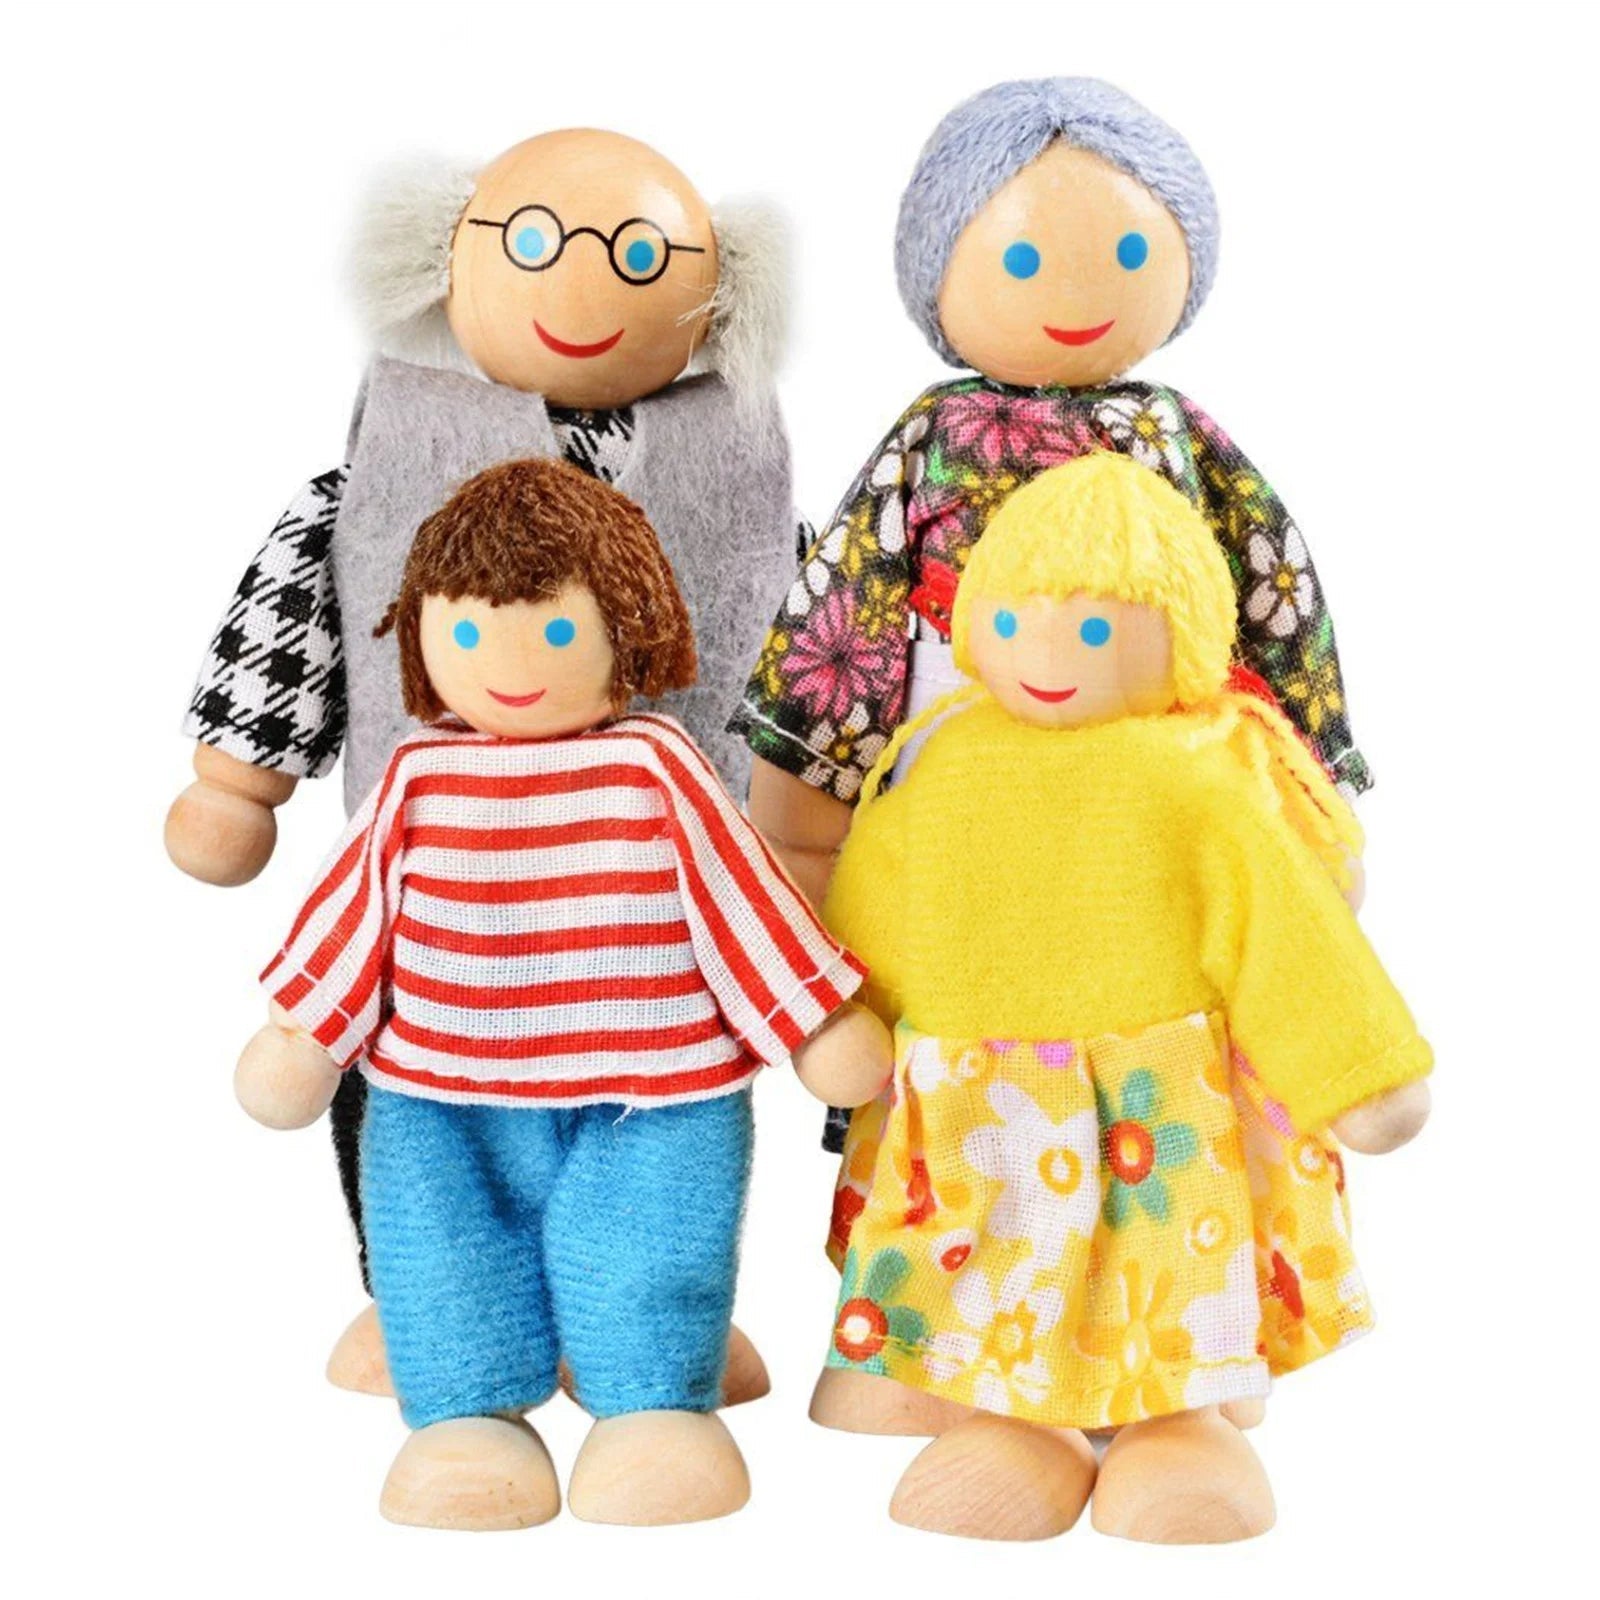 Wooden Family Member Dolls Set for Kids Pretend Play - 7 Pieces ToylandEU.com Toyland EU